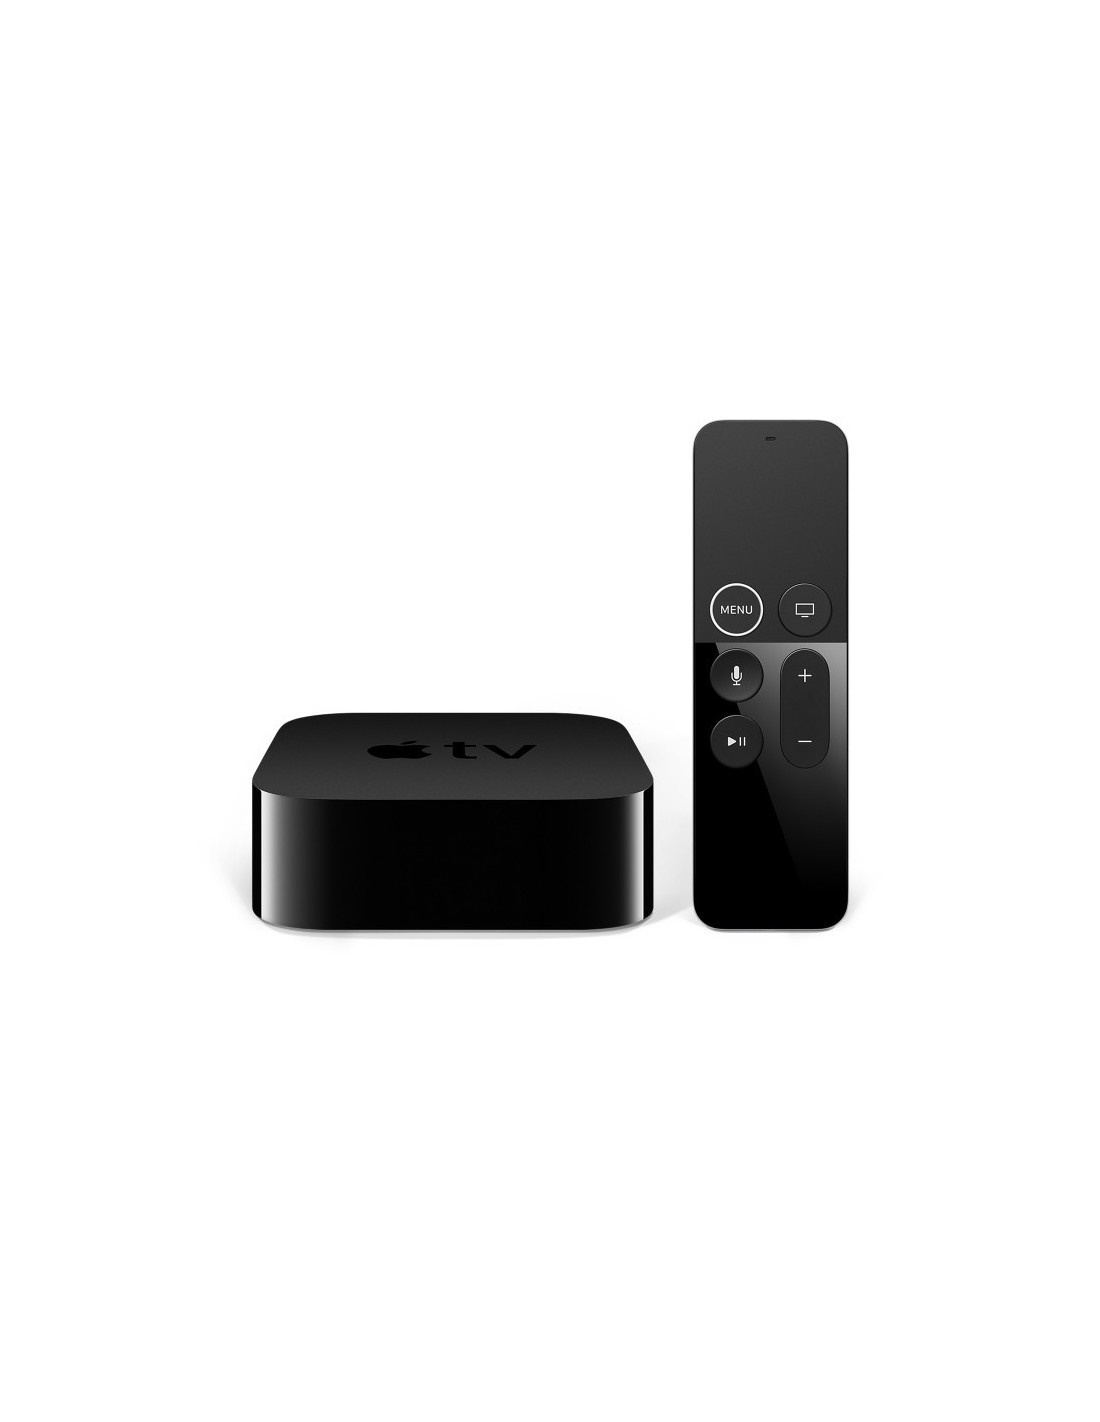 Apple Tv 4K Hdr 64Gb / Apple TV 4K (64GB) - Newegg.com - It has the